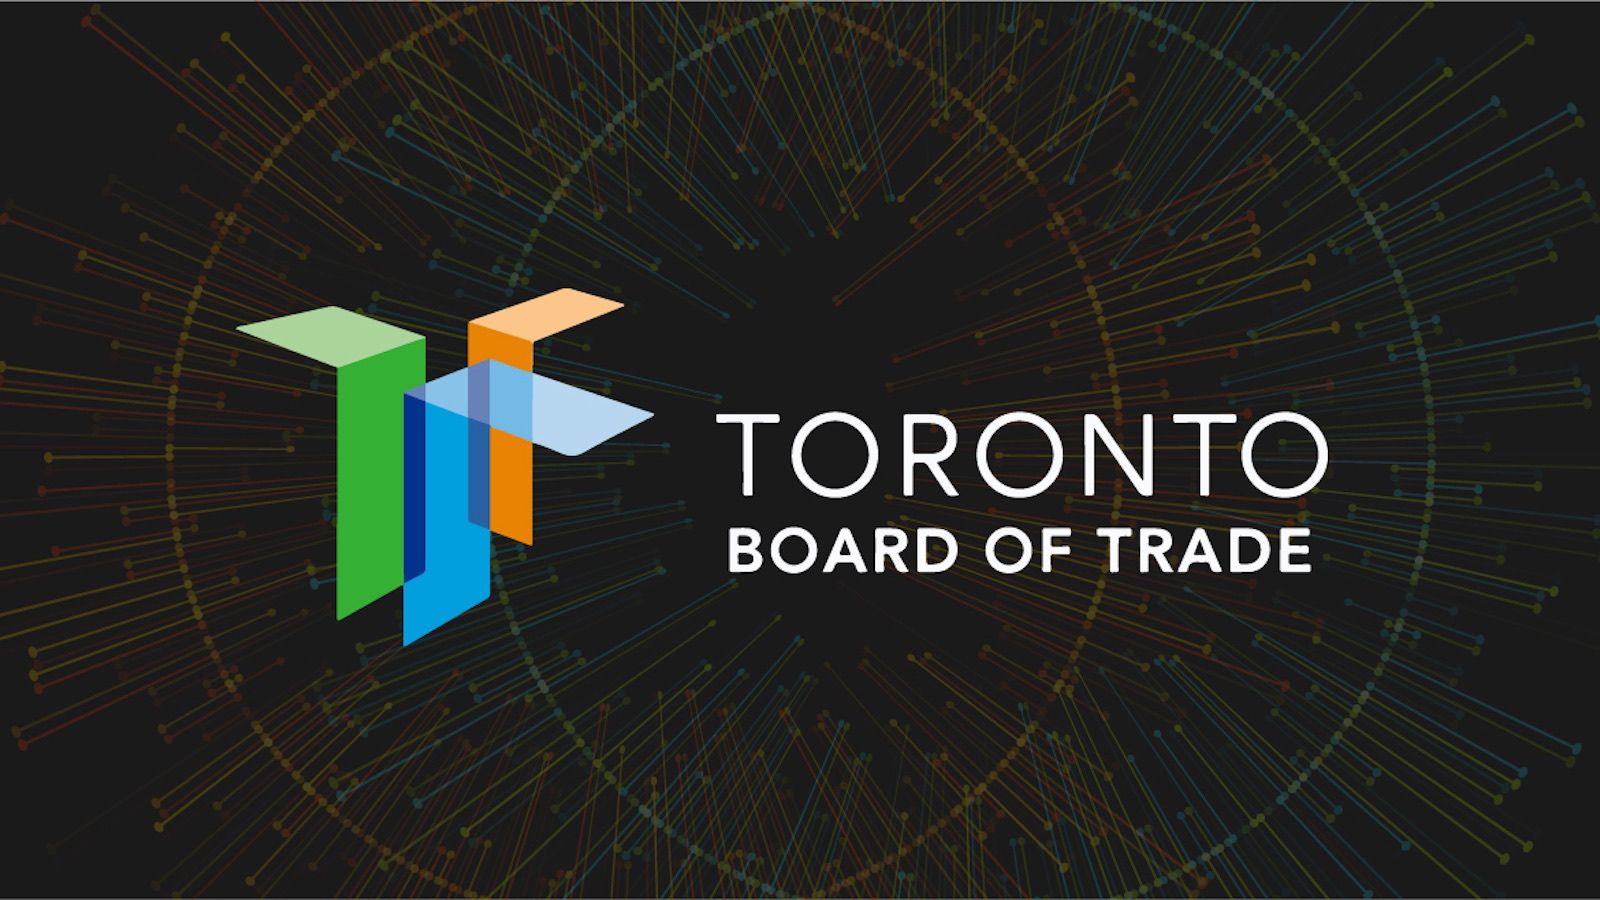 Toronto Board of Trade awards